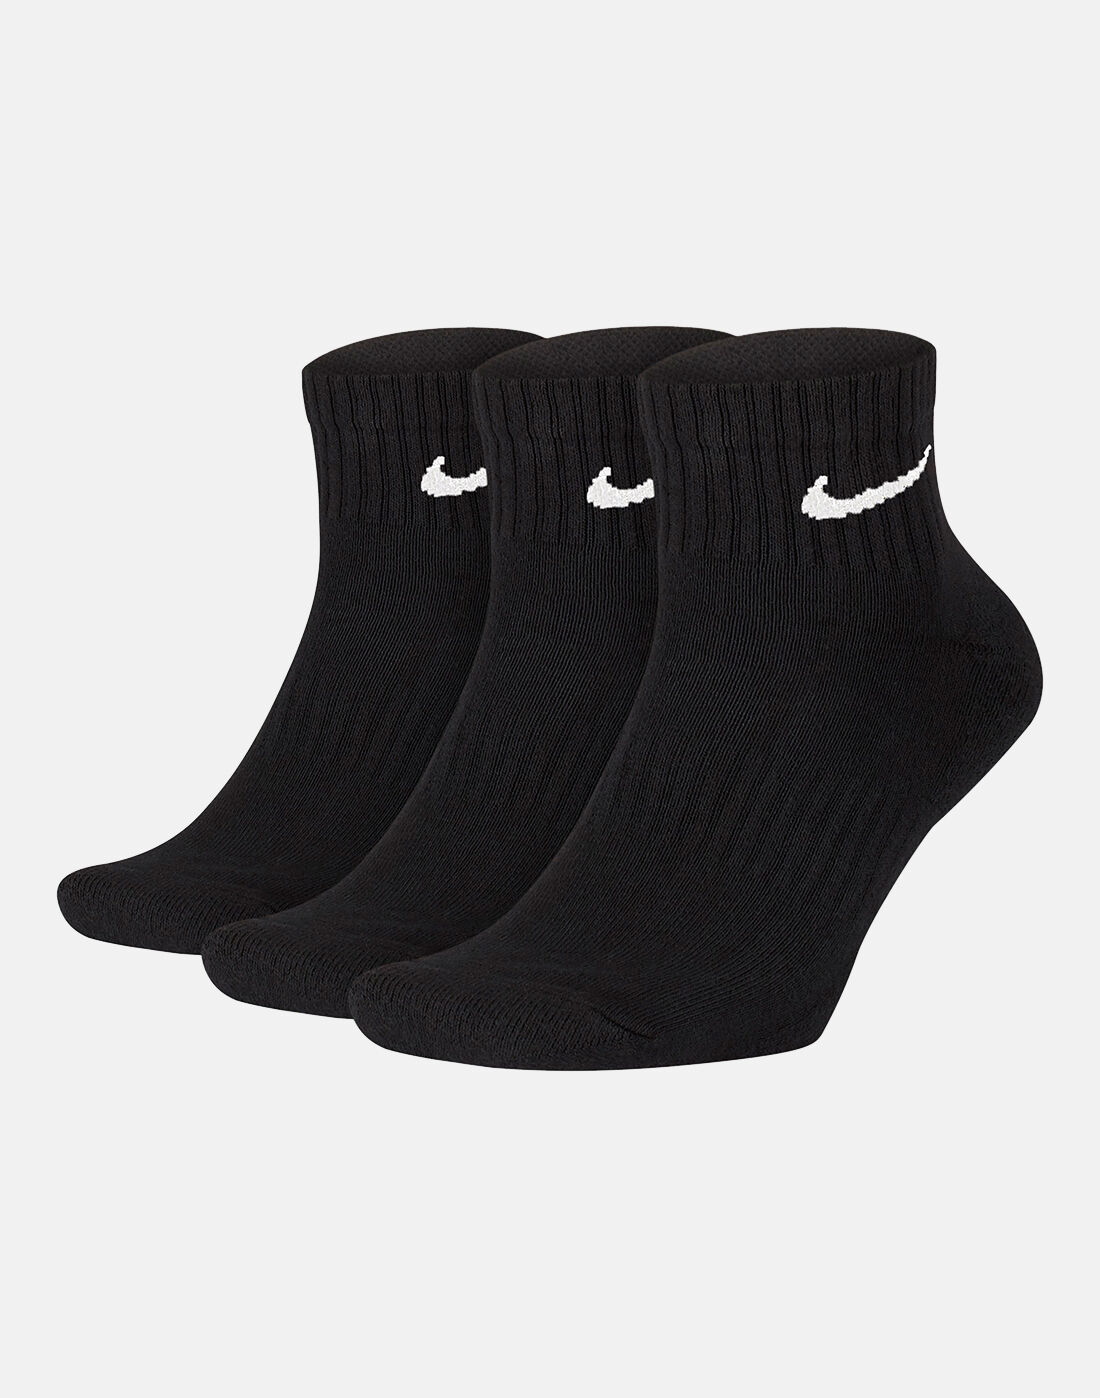 nike ankle socks for sale